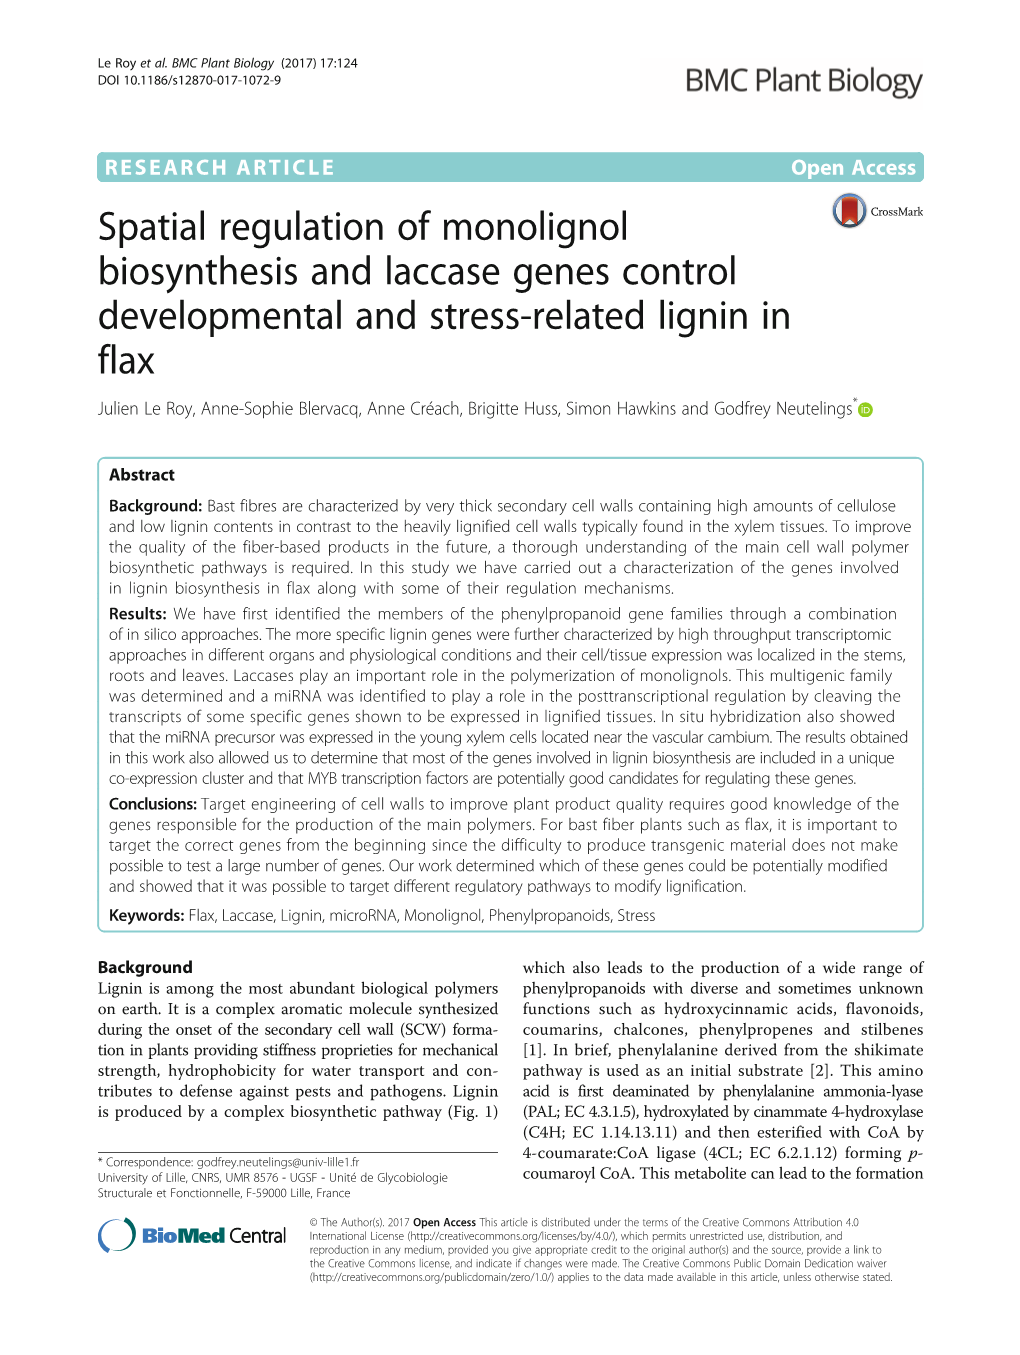 Spatial Regulation of Monolignol Biosynthesis